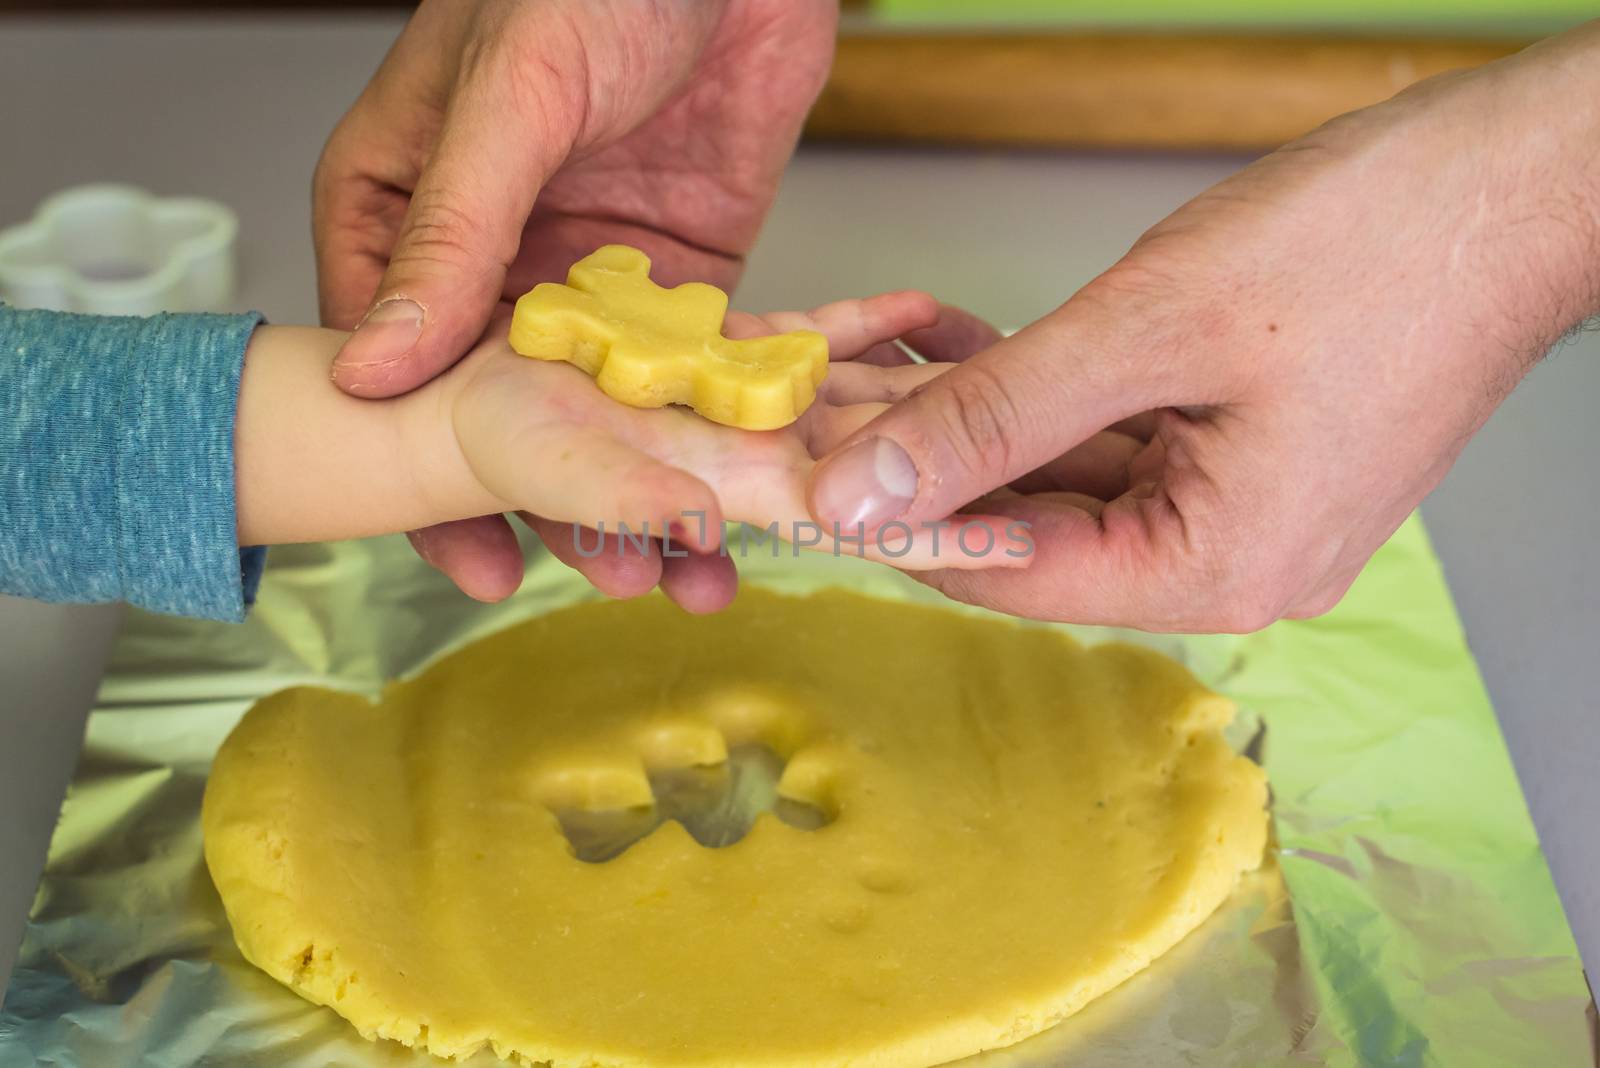 dough for children's hands by okskukuruza